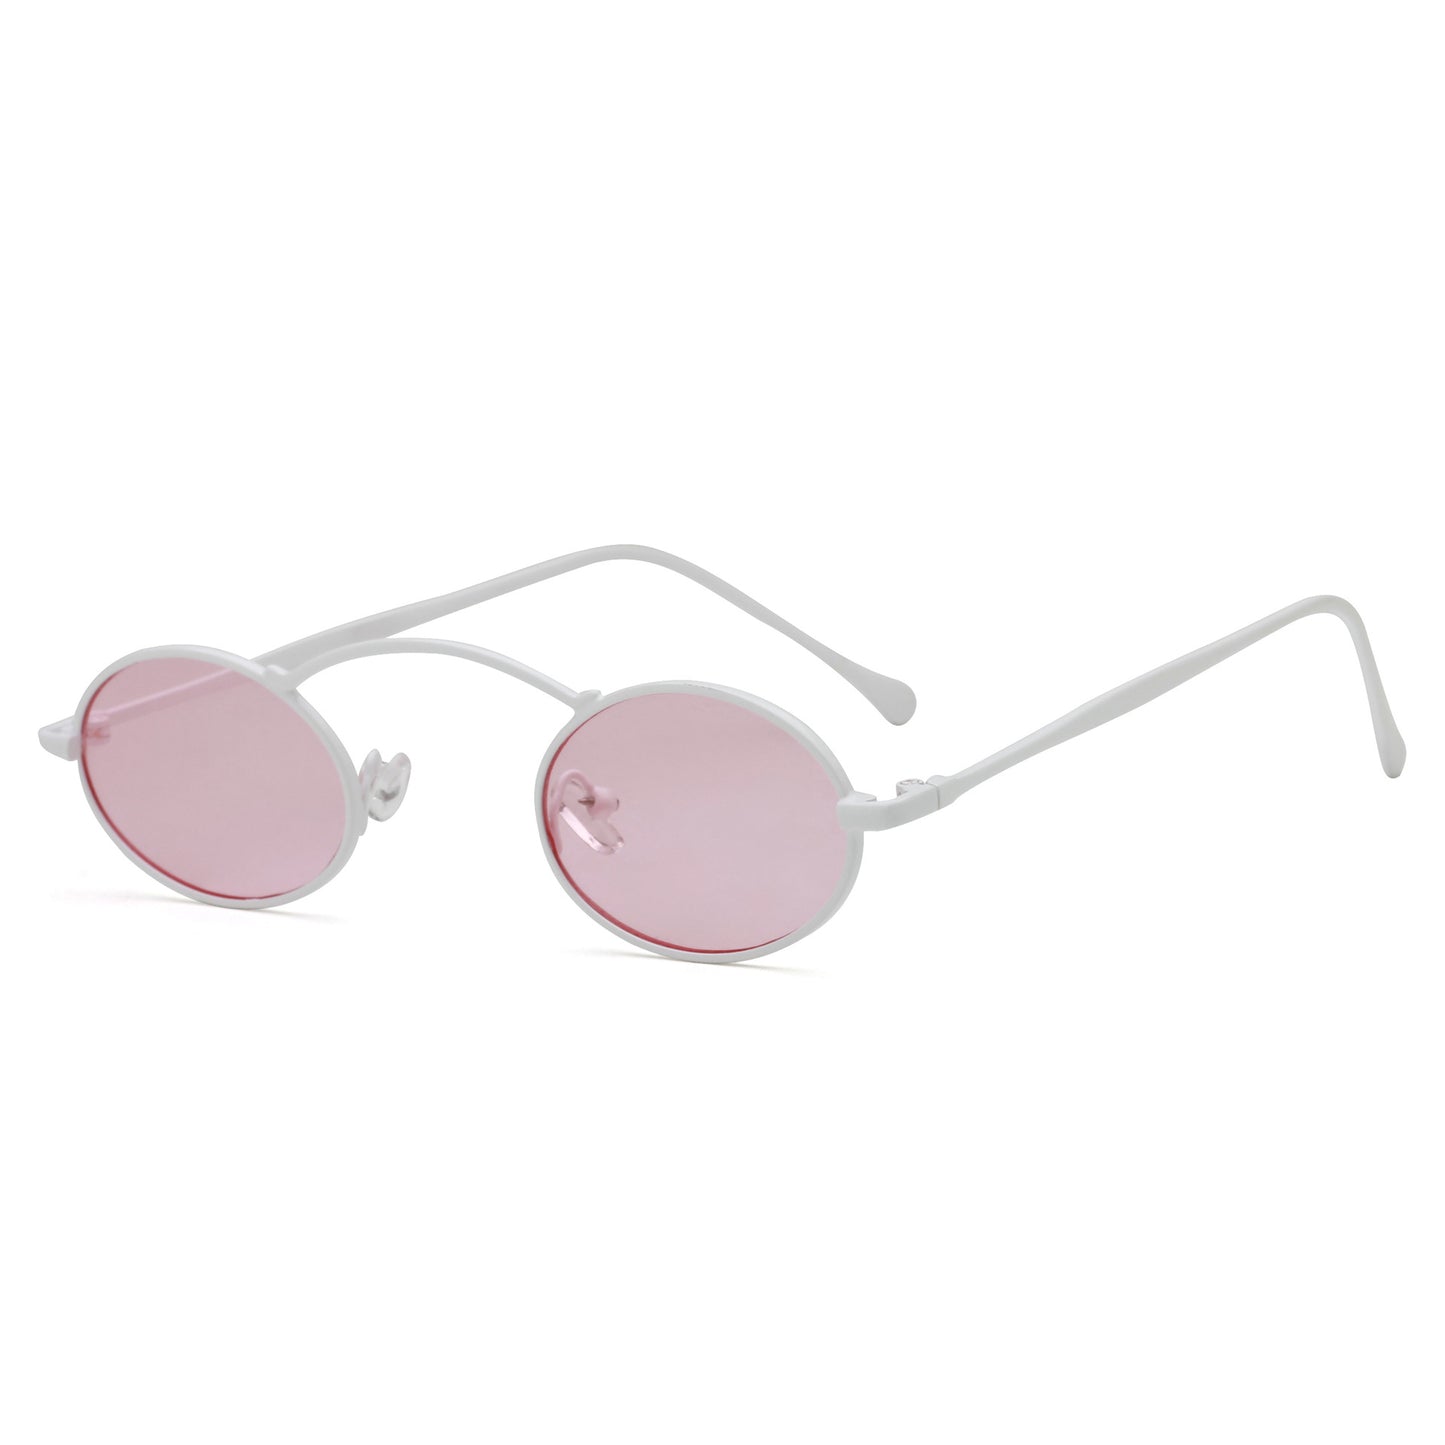 Small frame oval sunglasses  sunglasses Thecurvestory